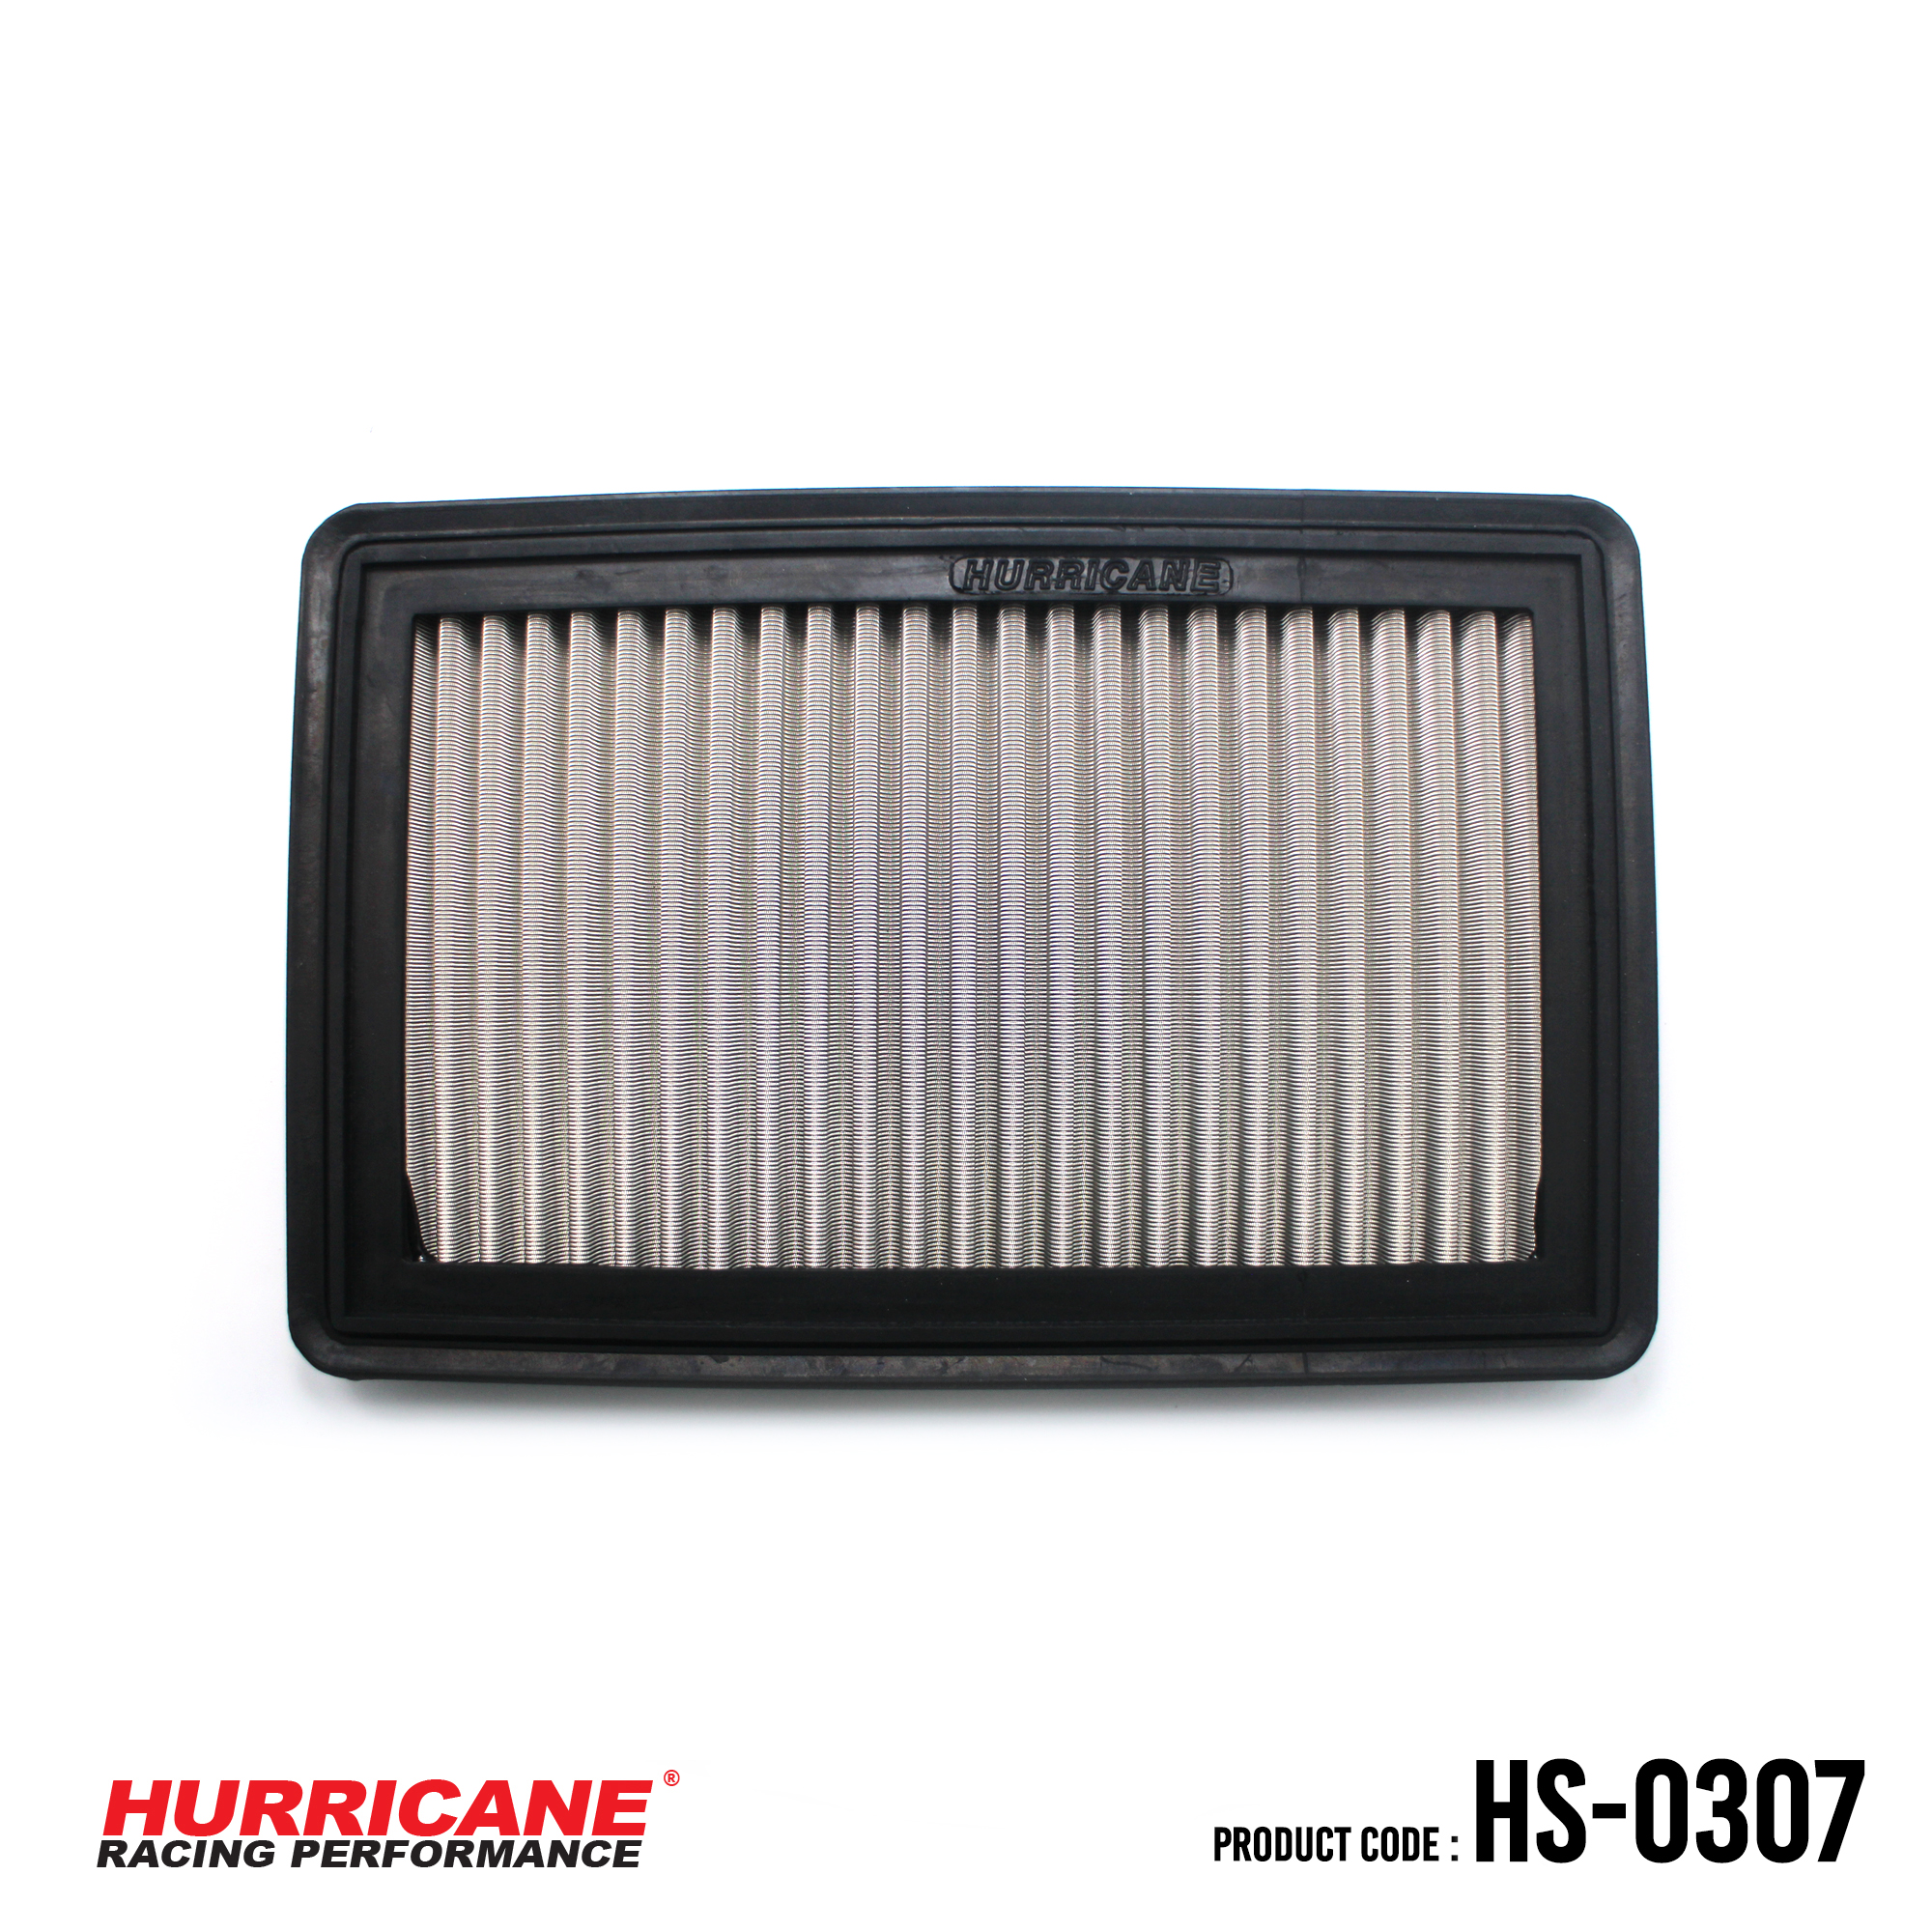 HURRICANE STAINLESS STEEL AIR FILTER FOR HS-0307 Hyundai